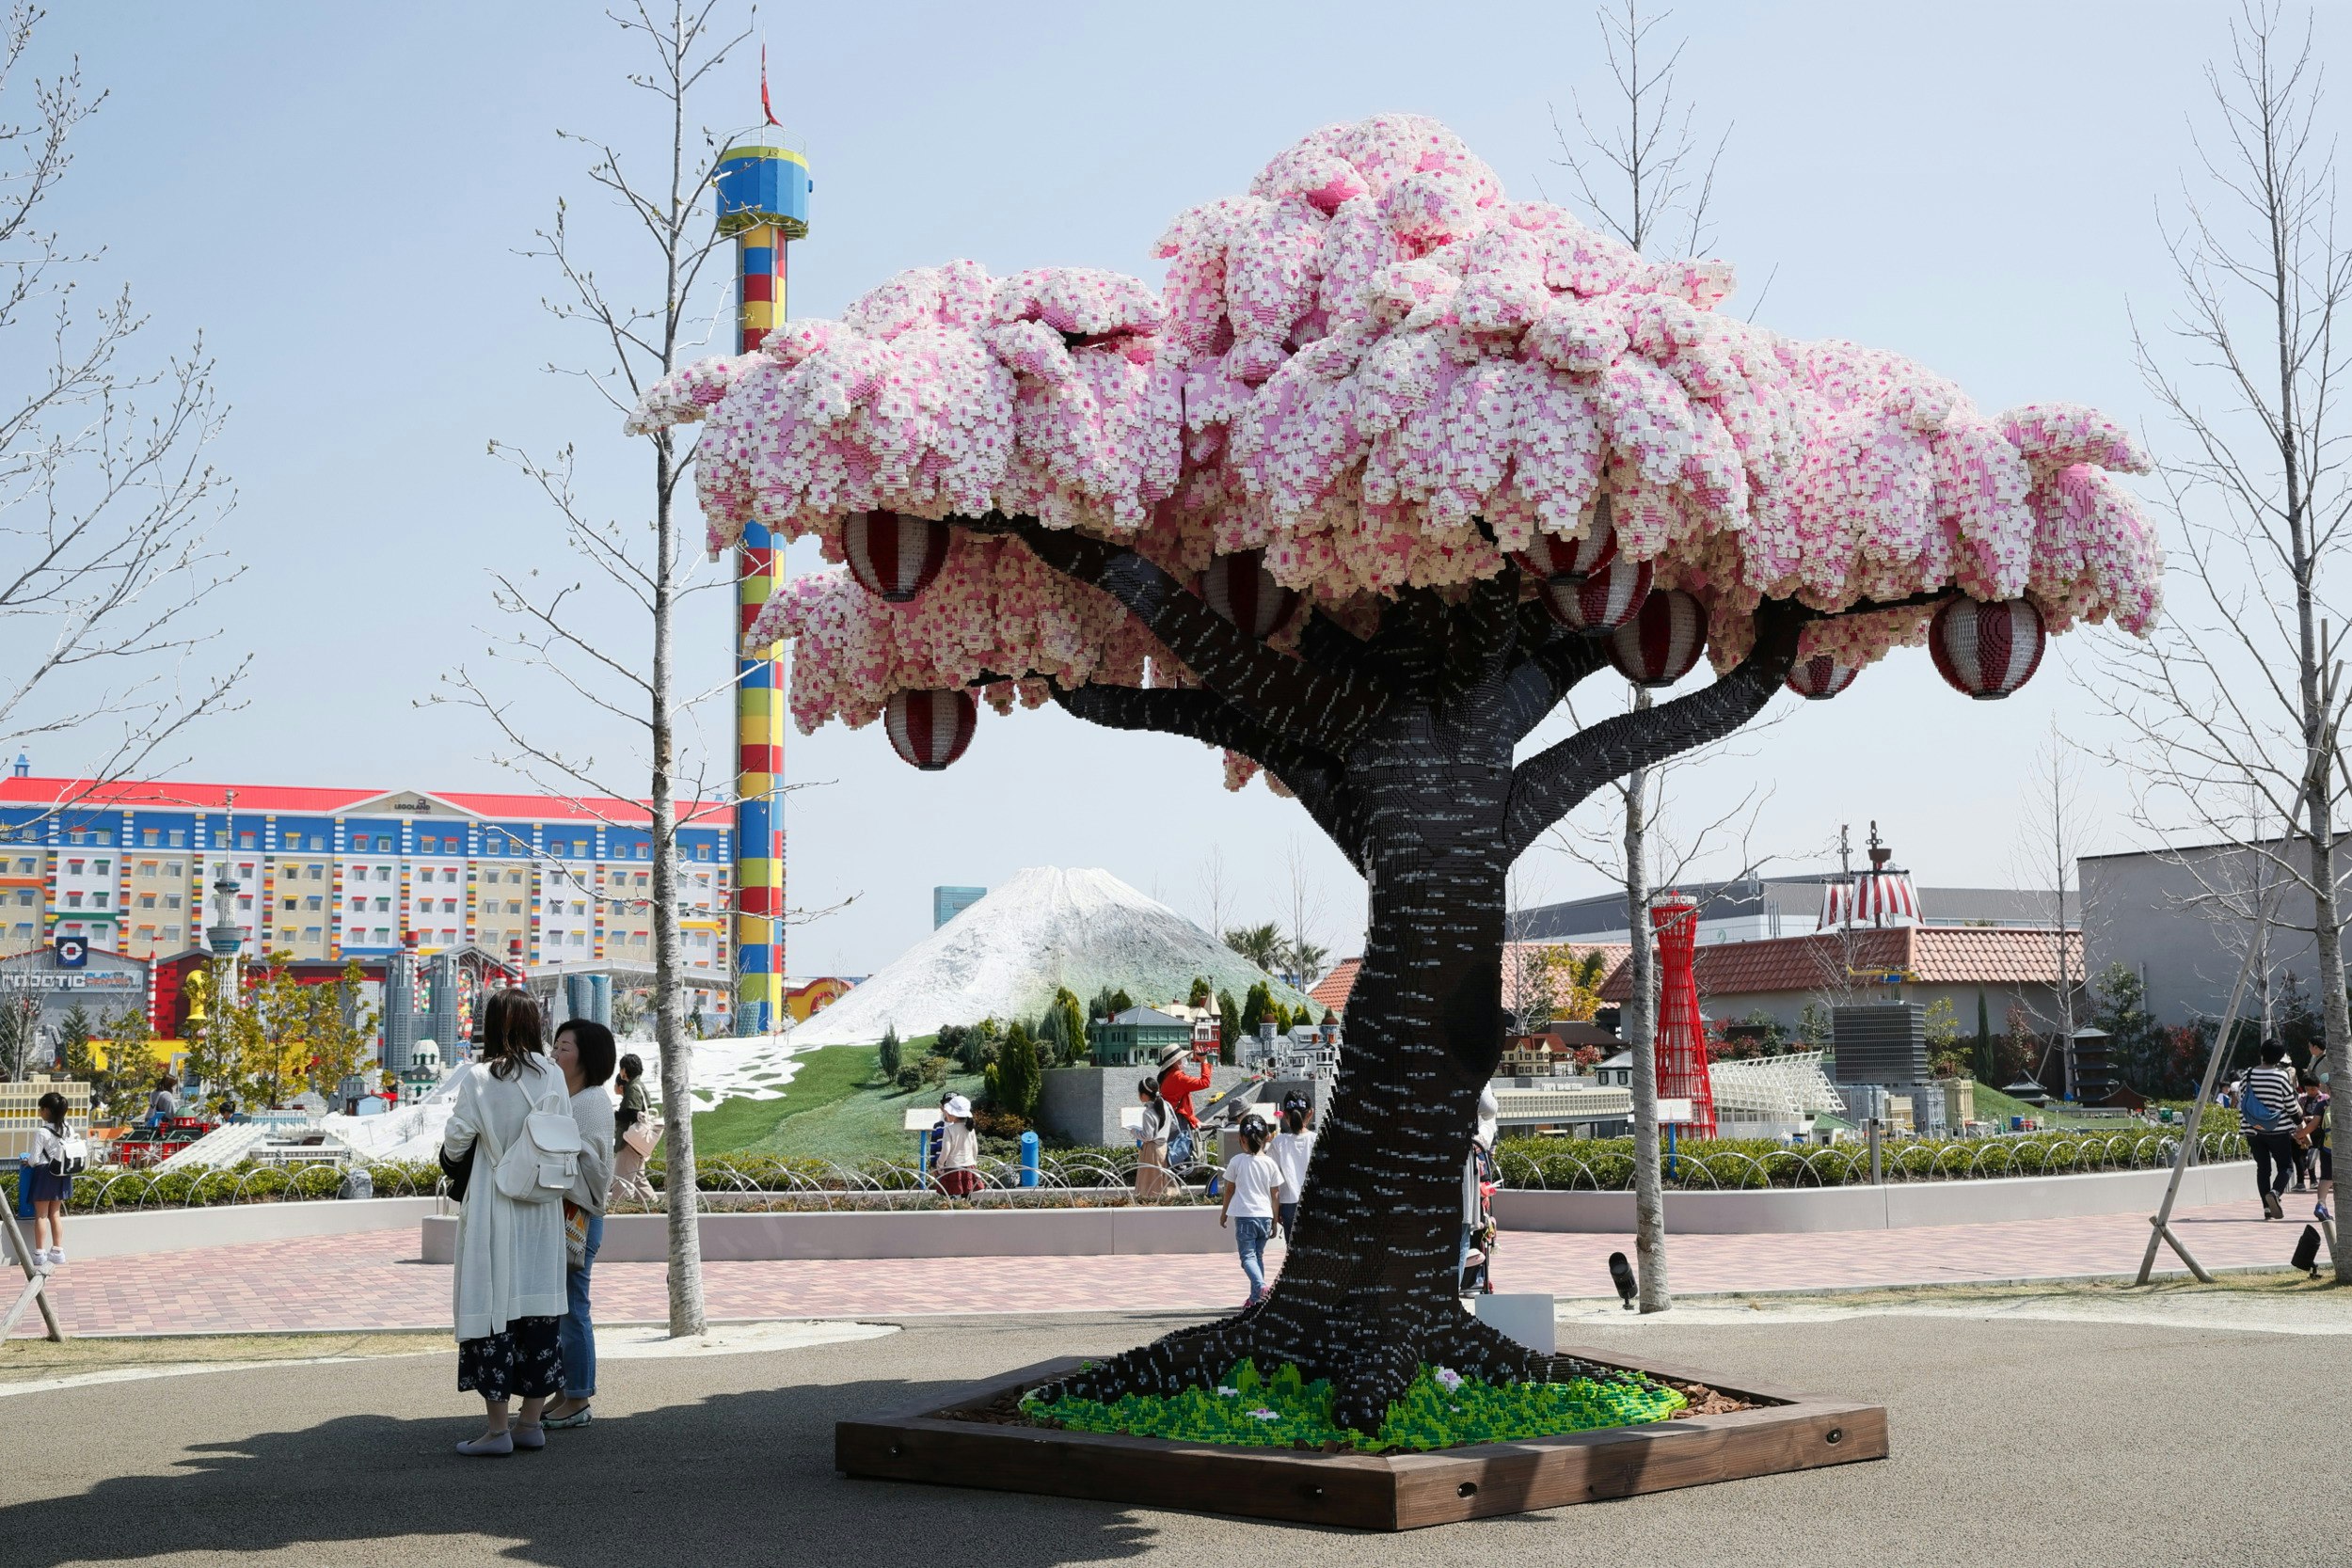 The record-breaking cherry blossom tree at LEGOLAND Japan.